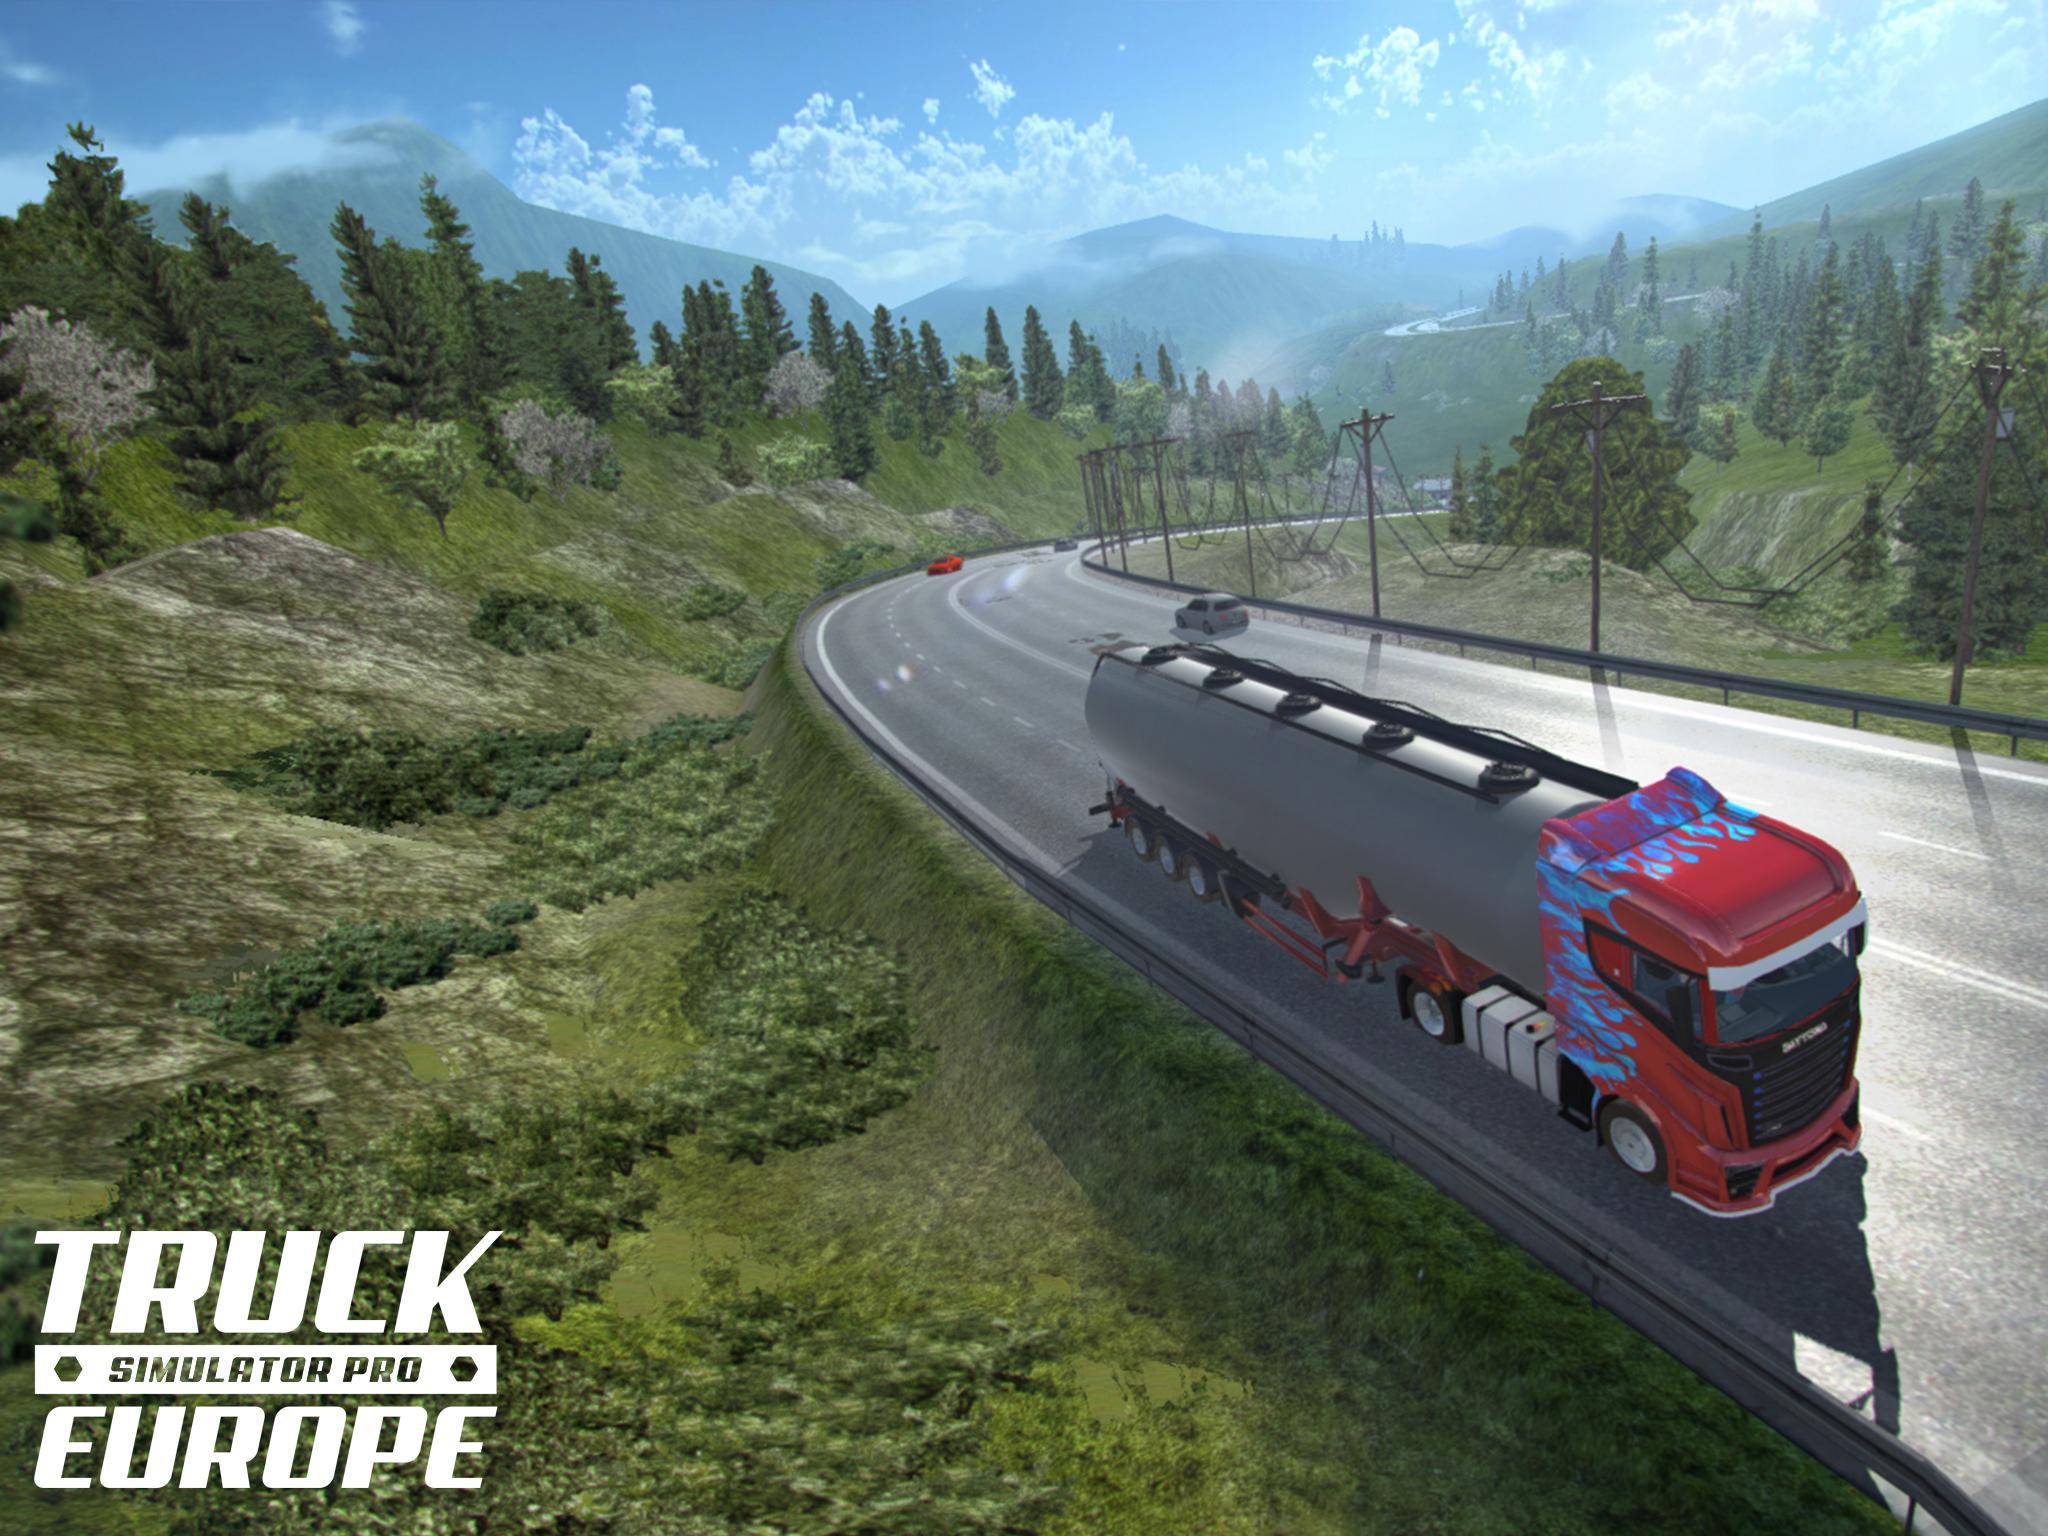 Евро трак игра. Симулятор грузовика Европа 2. Truck Simulator Pro 2017. Трак симулятор про Европа. Дальнобойщик европа игра